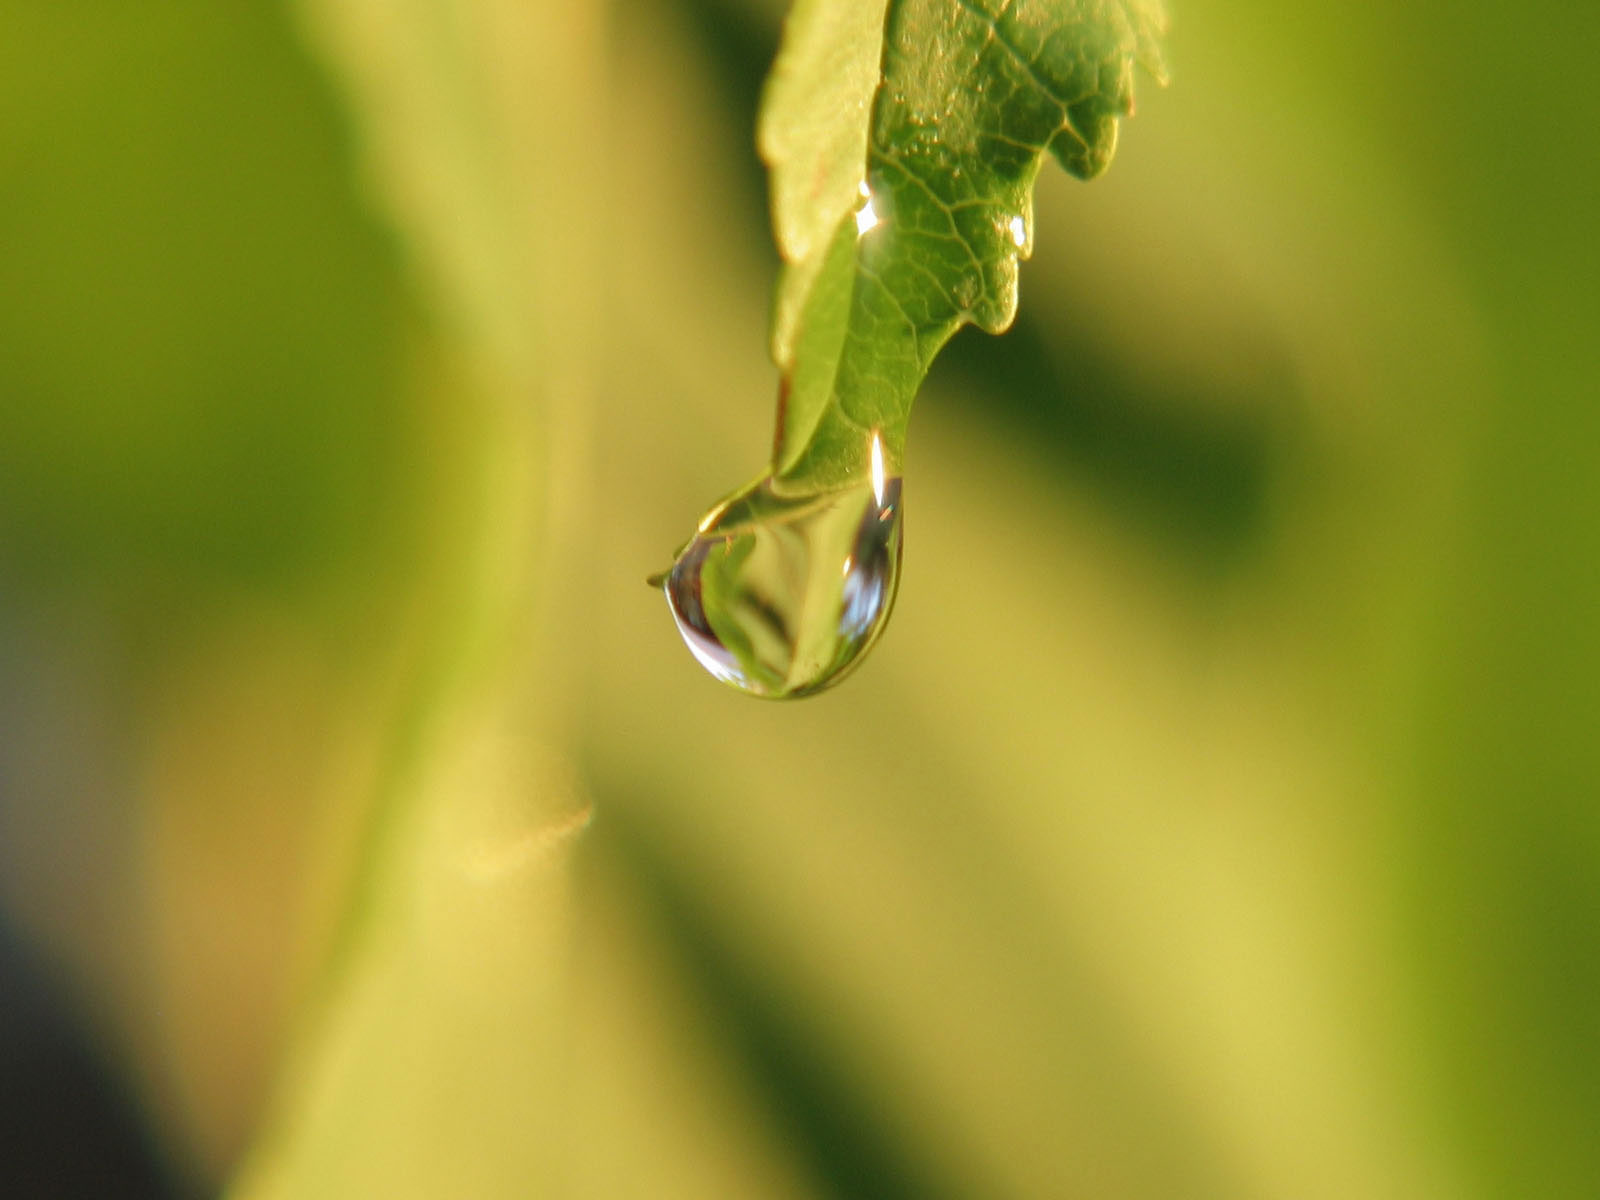 Drop Leaf